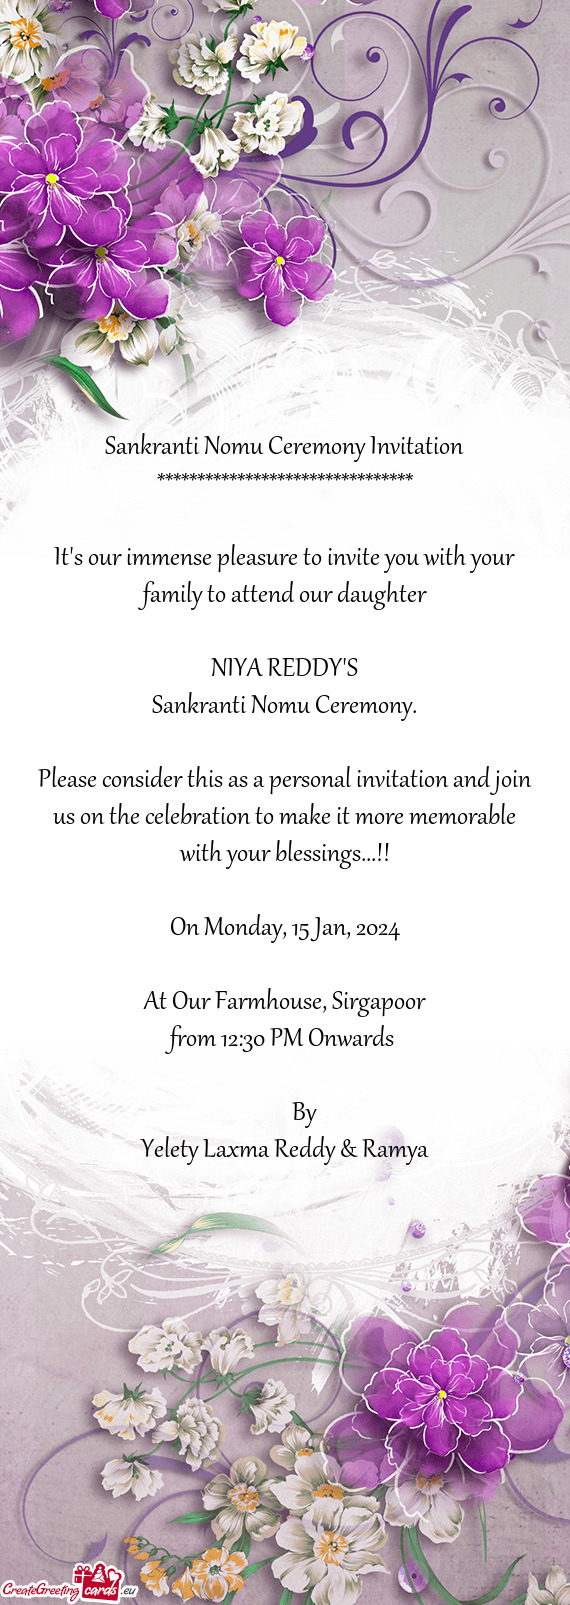 Sankranti Nomu Ceremony Invitation